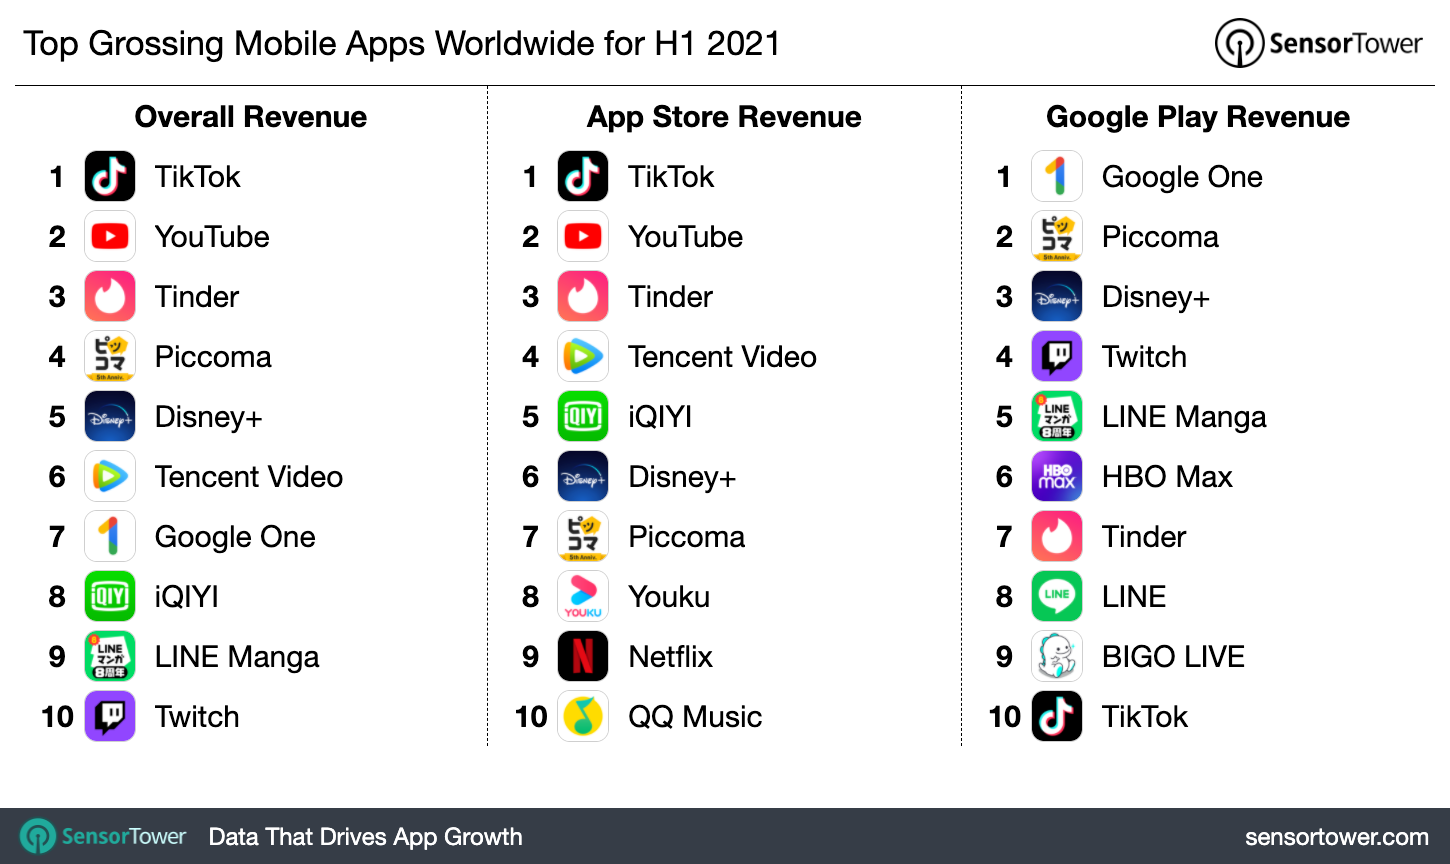 1H 2021 Top Grossing Apps Worldwide